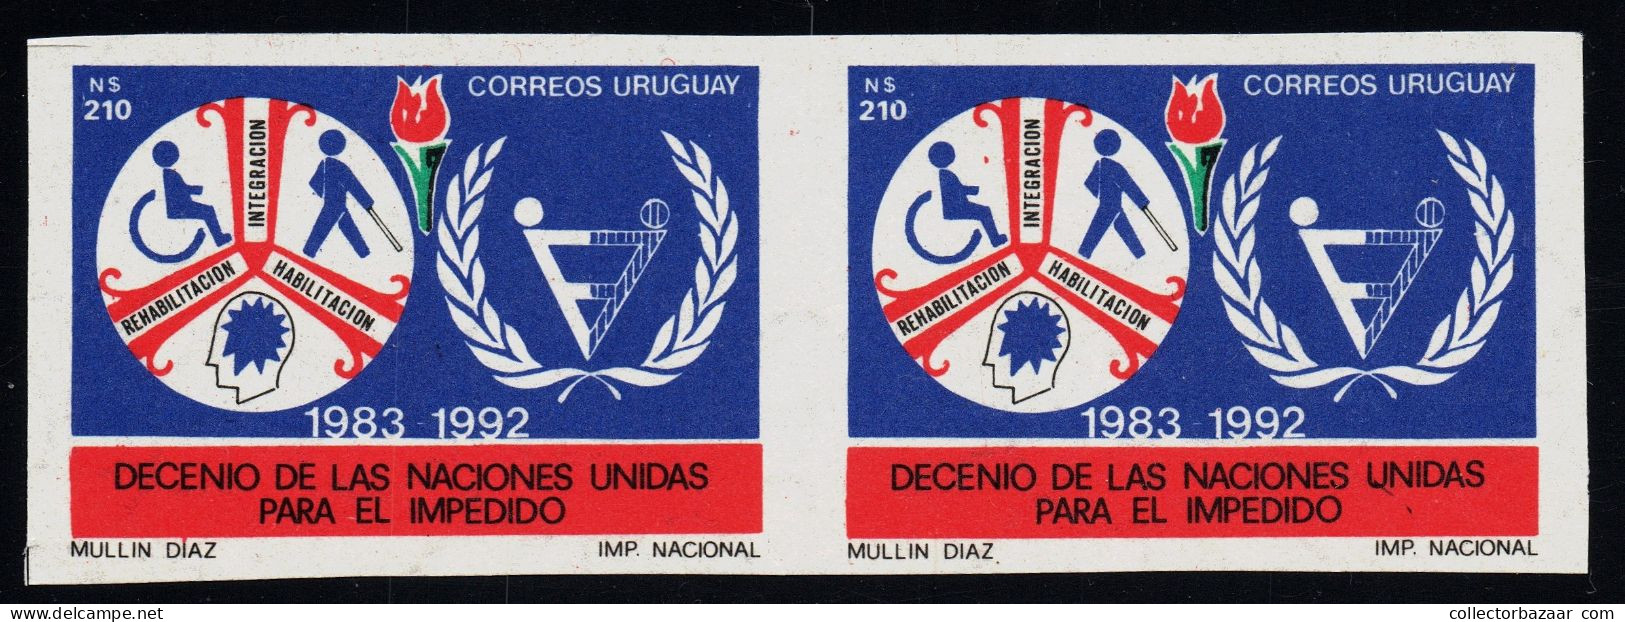 Handicap Menta Disease Blind Wheelchair Uruguay ONU Imperforated Pair MNH - Handicap